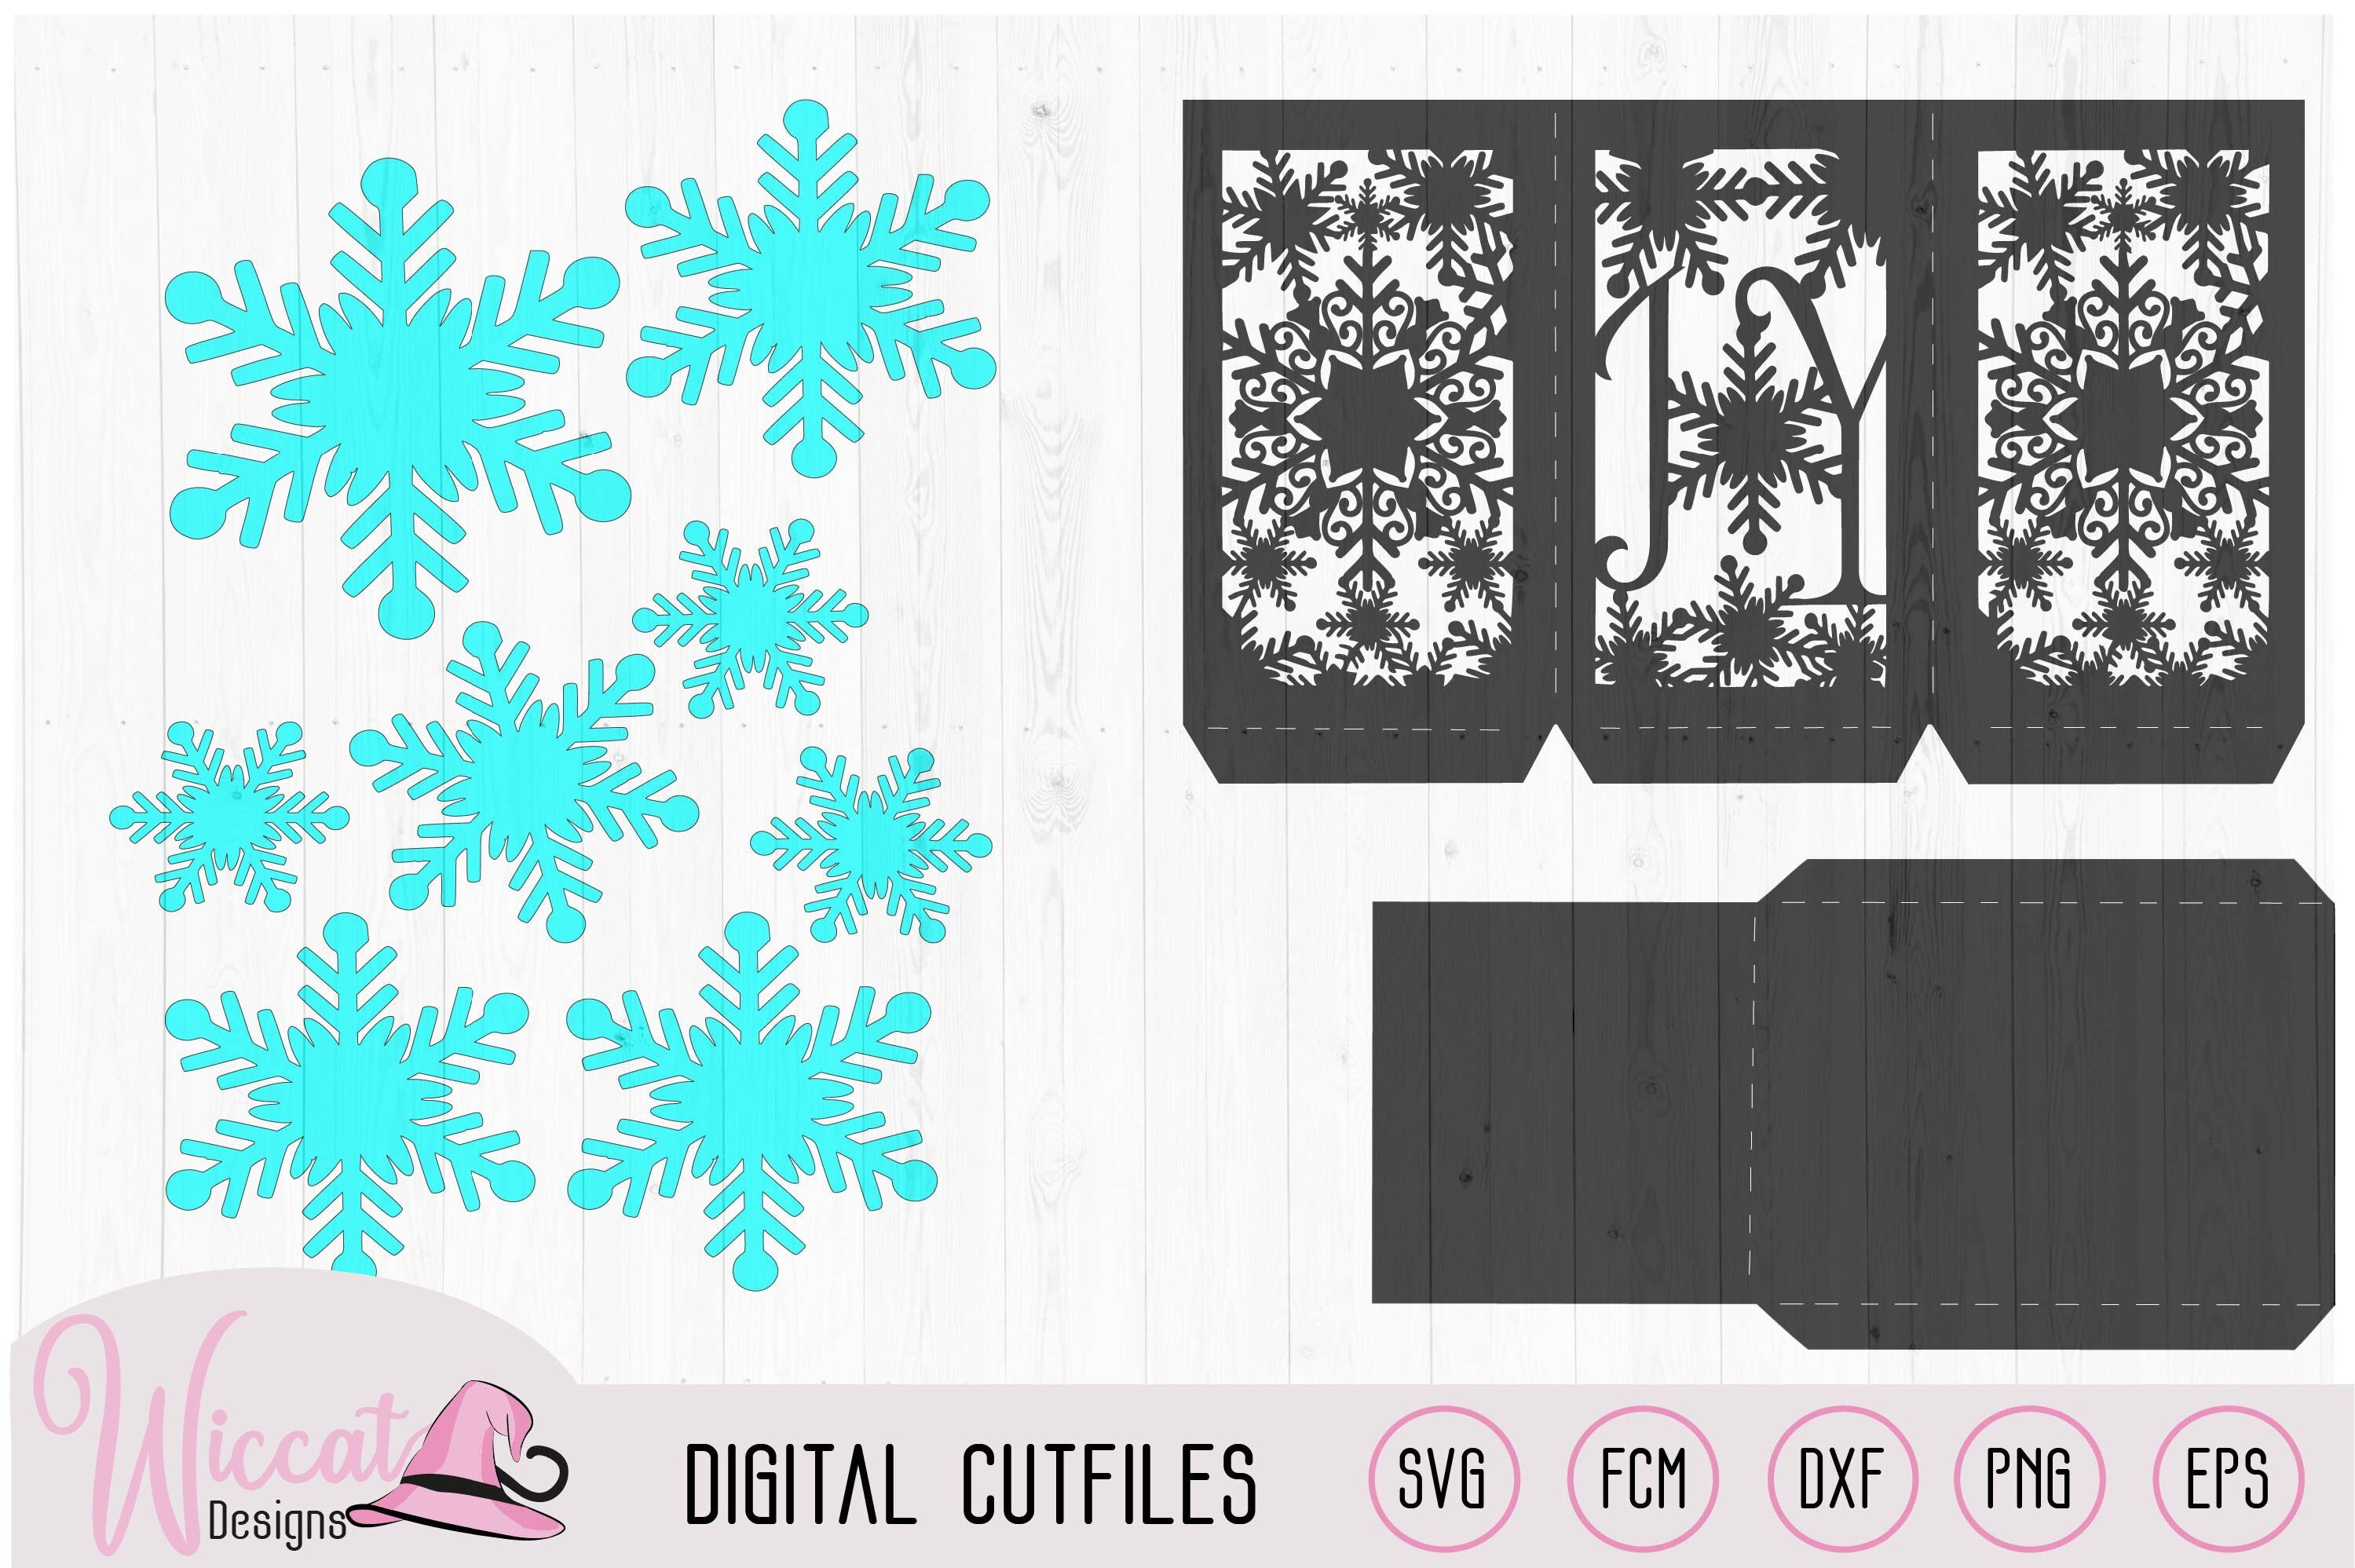 Joy Christmas Lantern Template Snowflakes And Ice Stars By Wiccatdesigns Thehungryjpeg Com